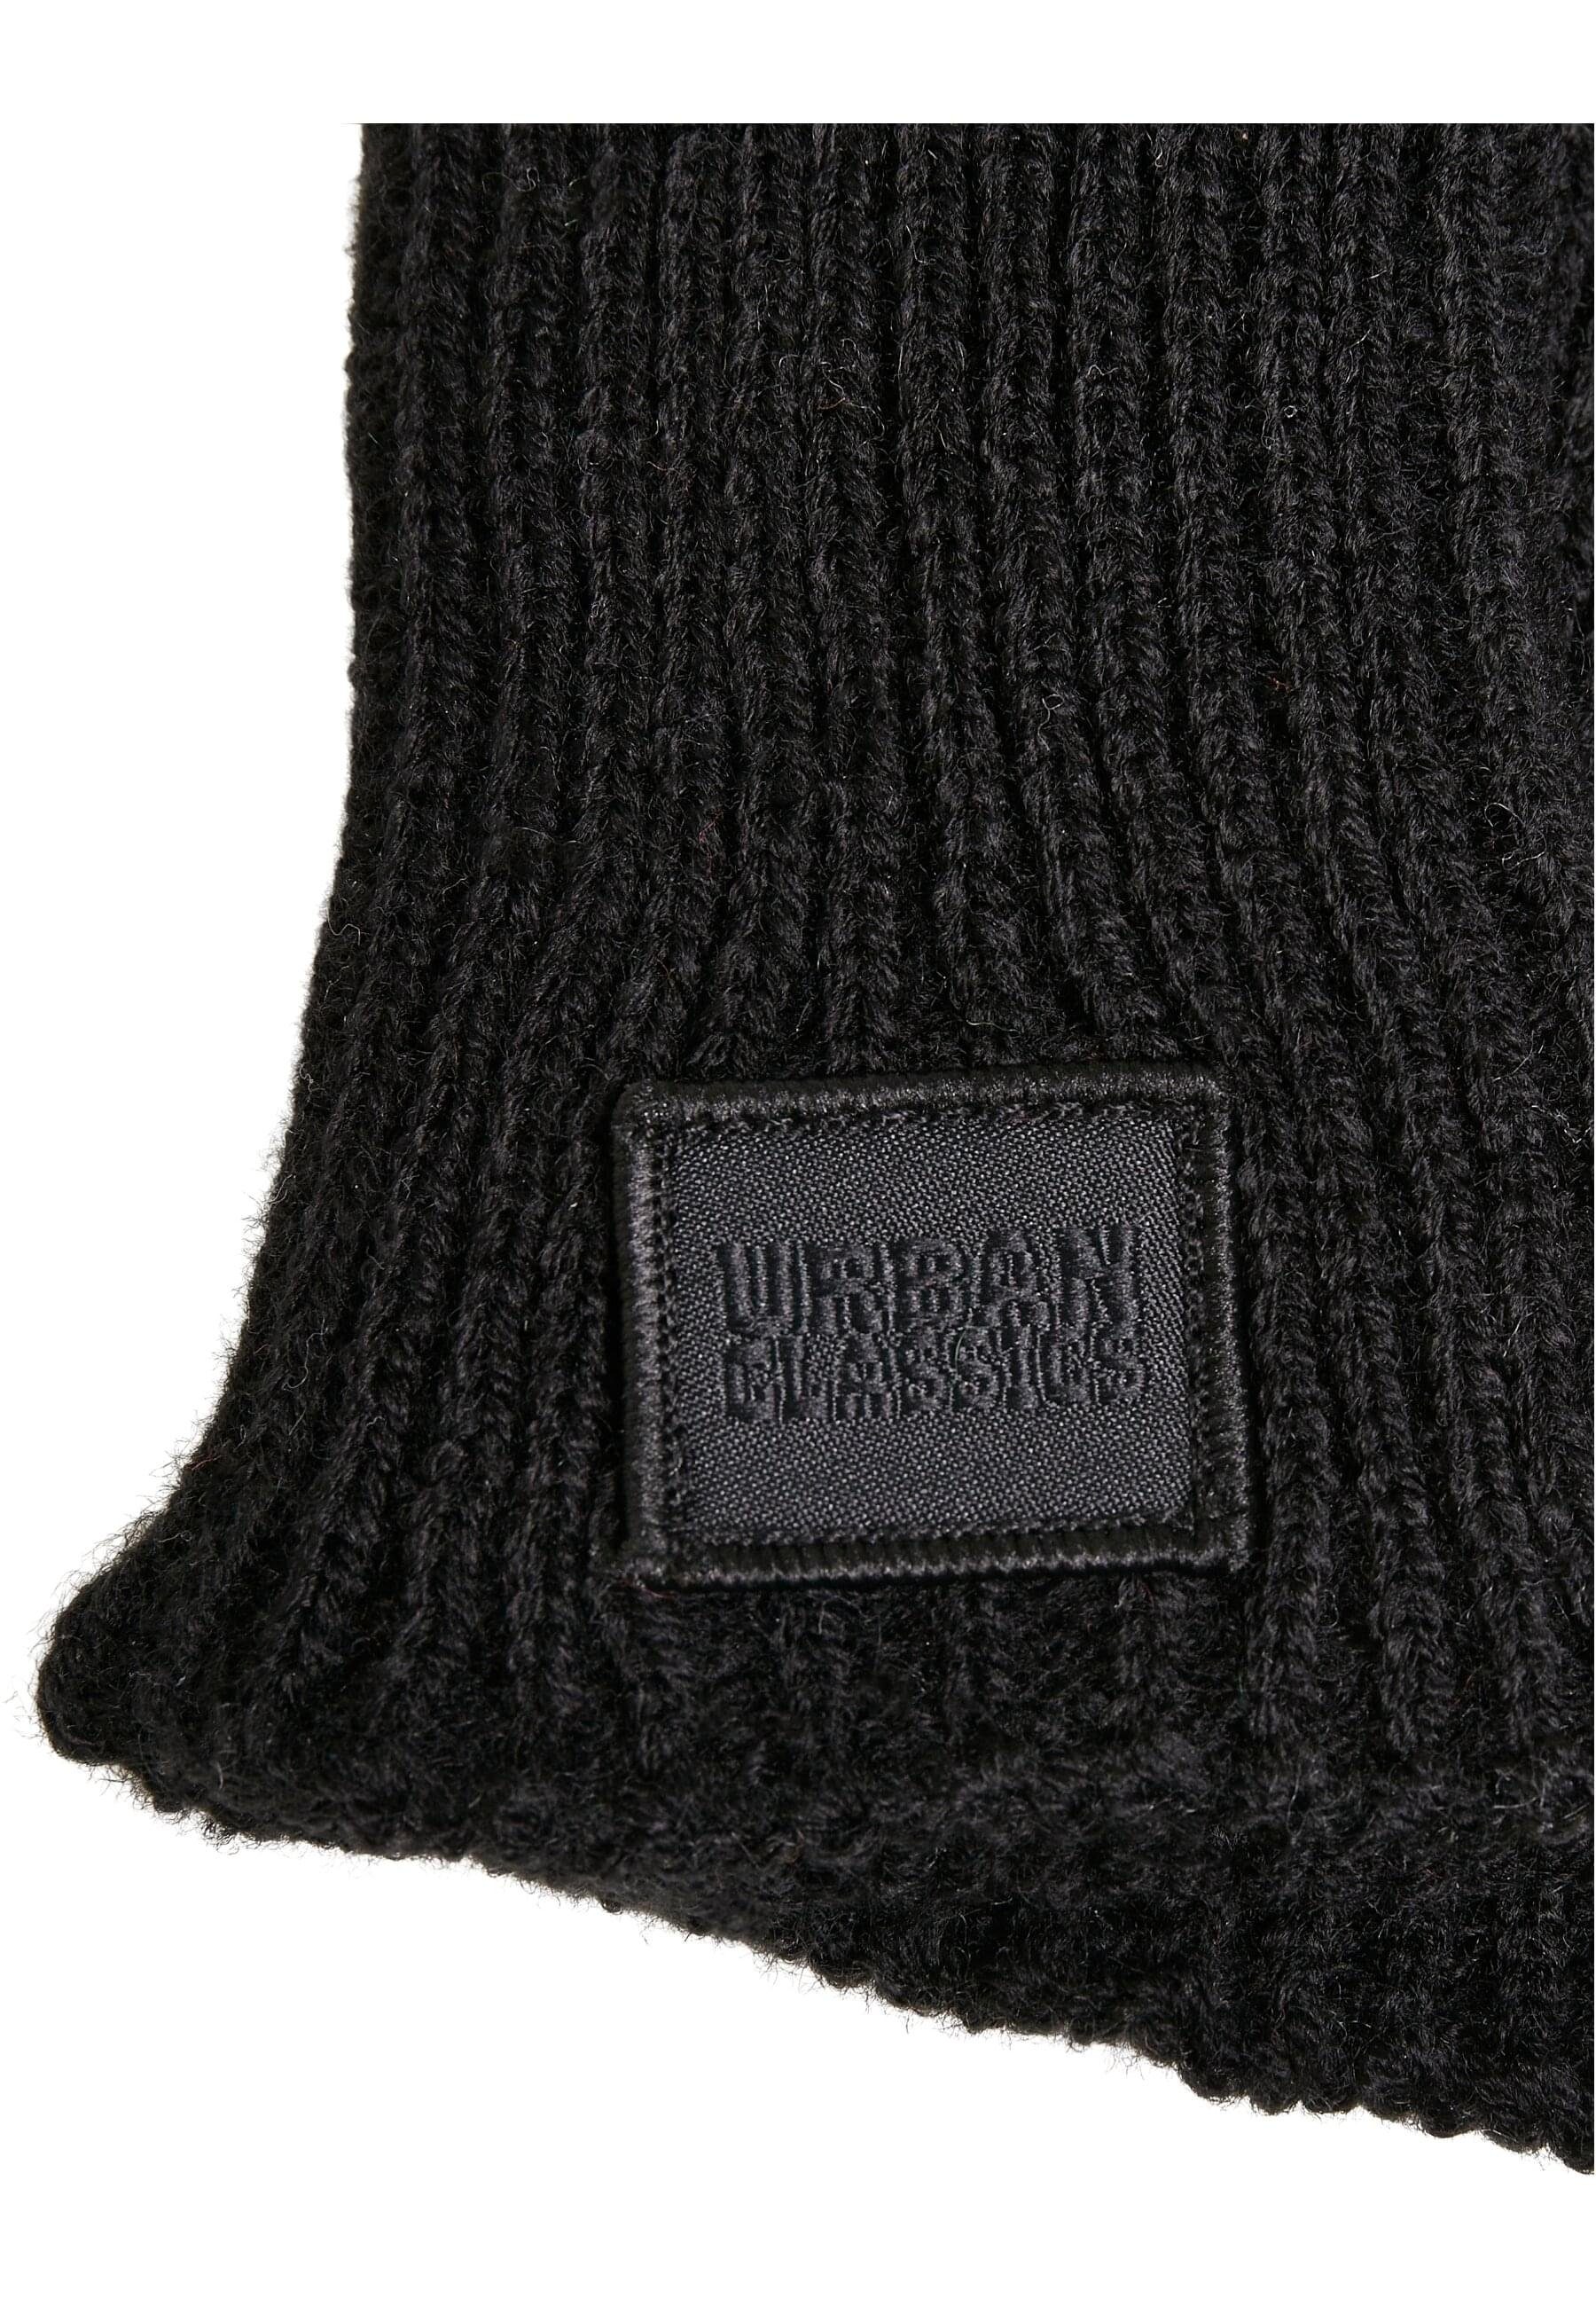 CLASSICS black Unisex Baumwollhandschuhe Wool Knitted Gloves URBAN Mix Smart